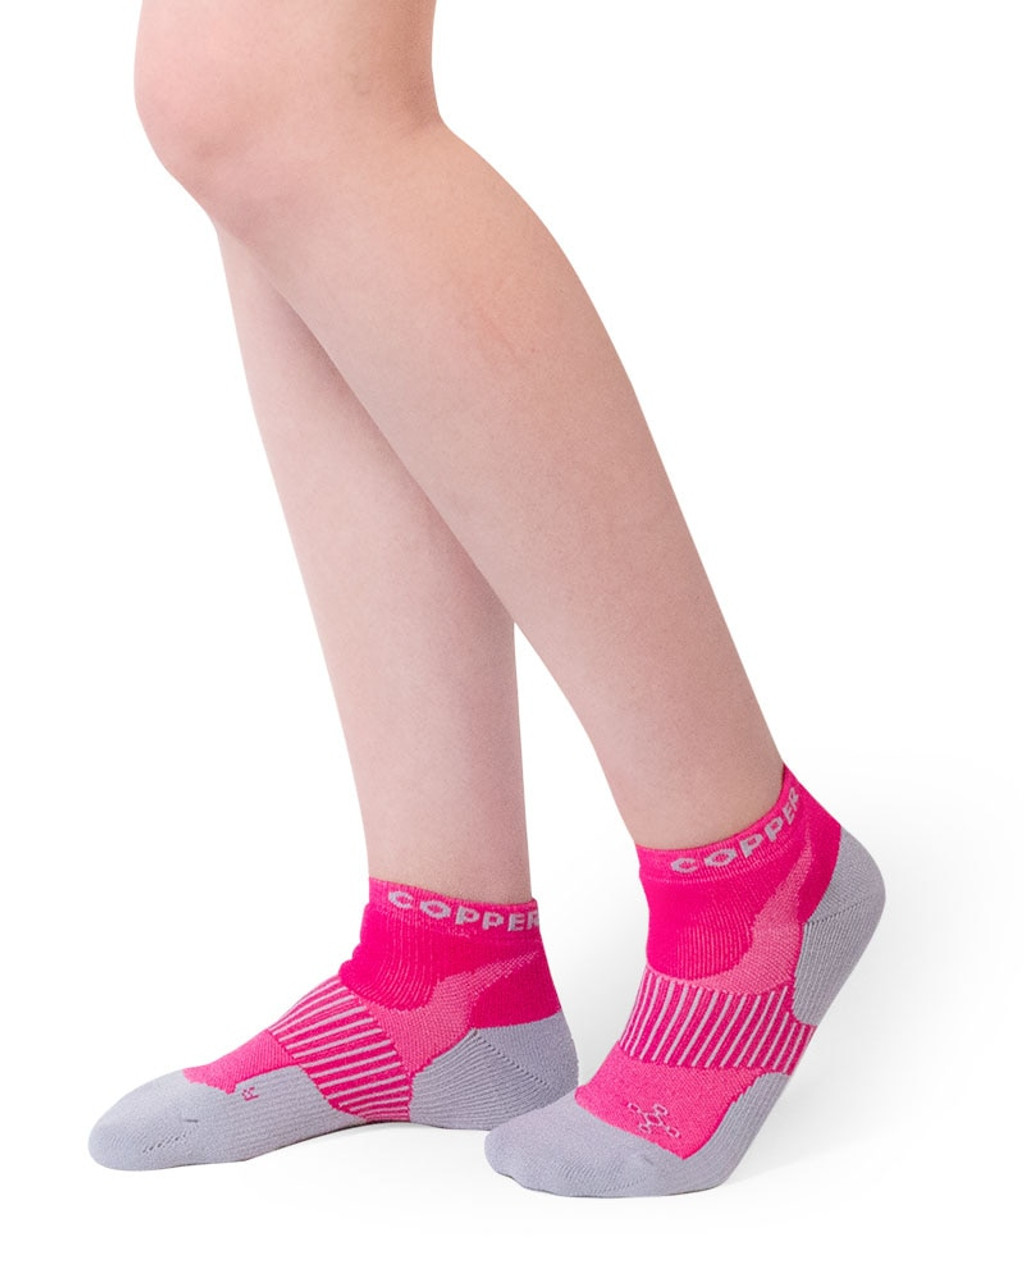 Women's Short Compression Socks, 3.0